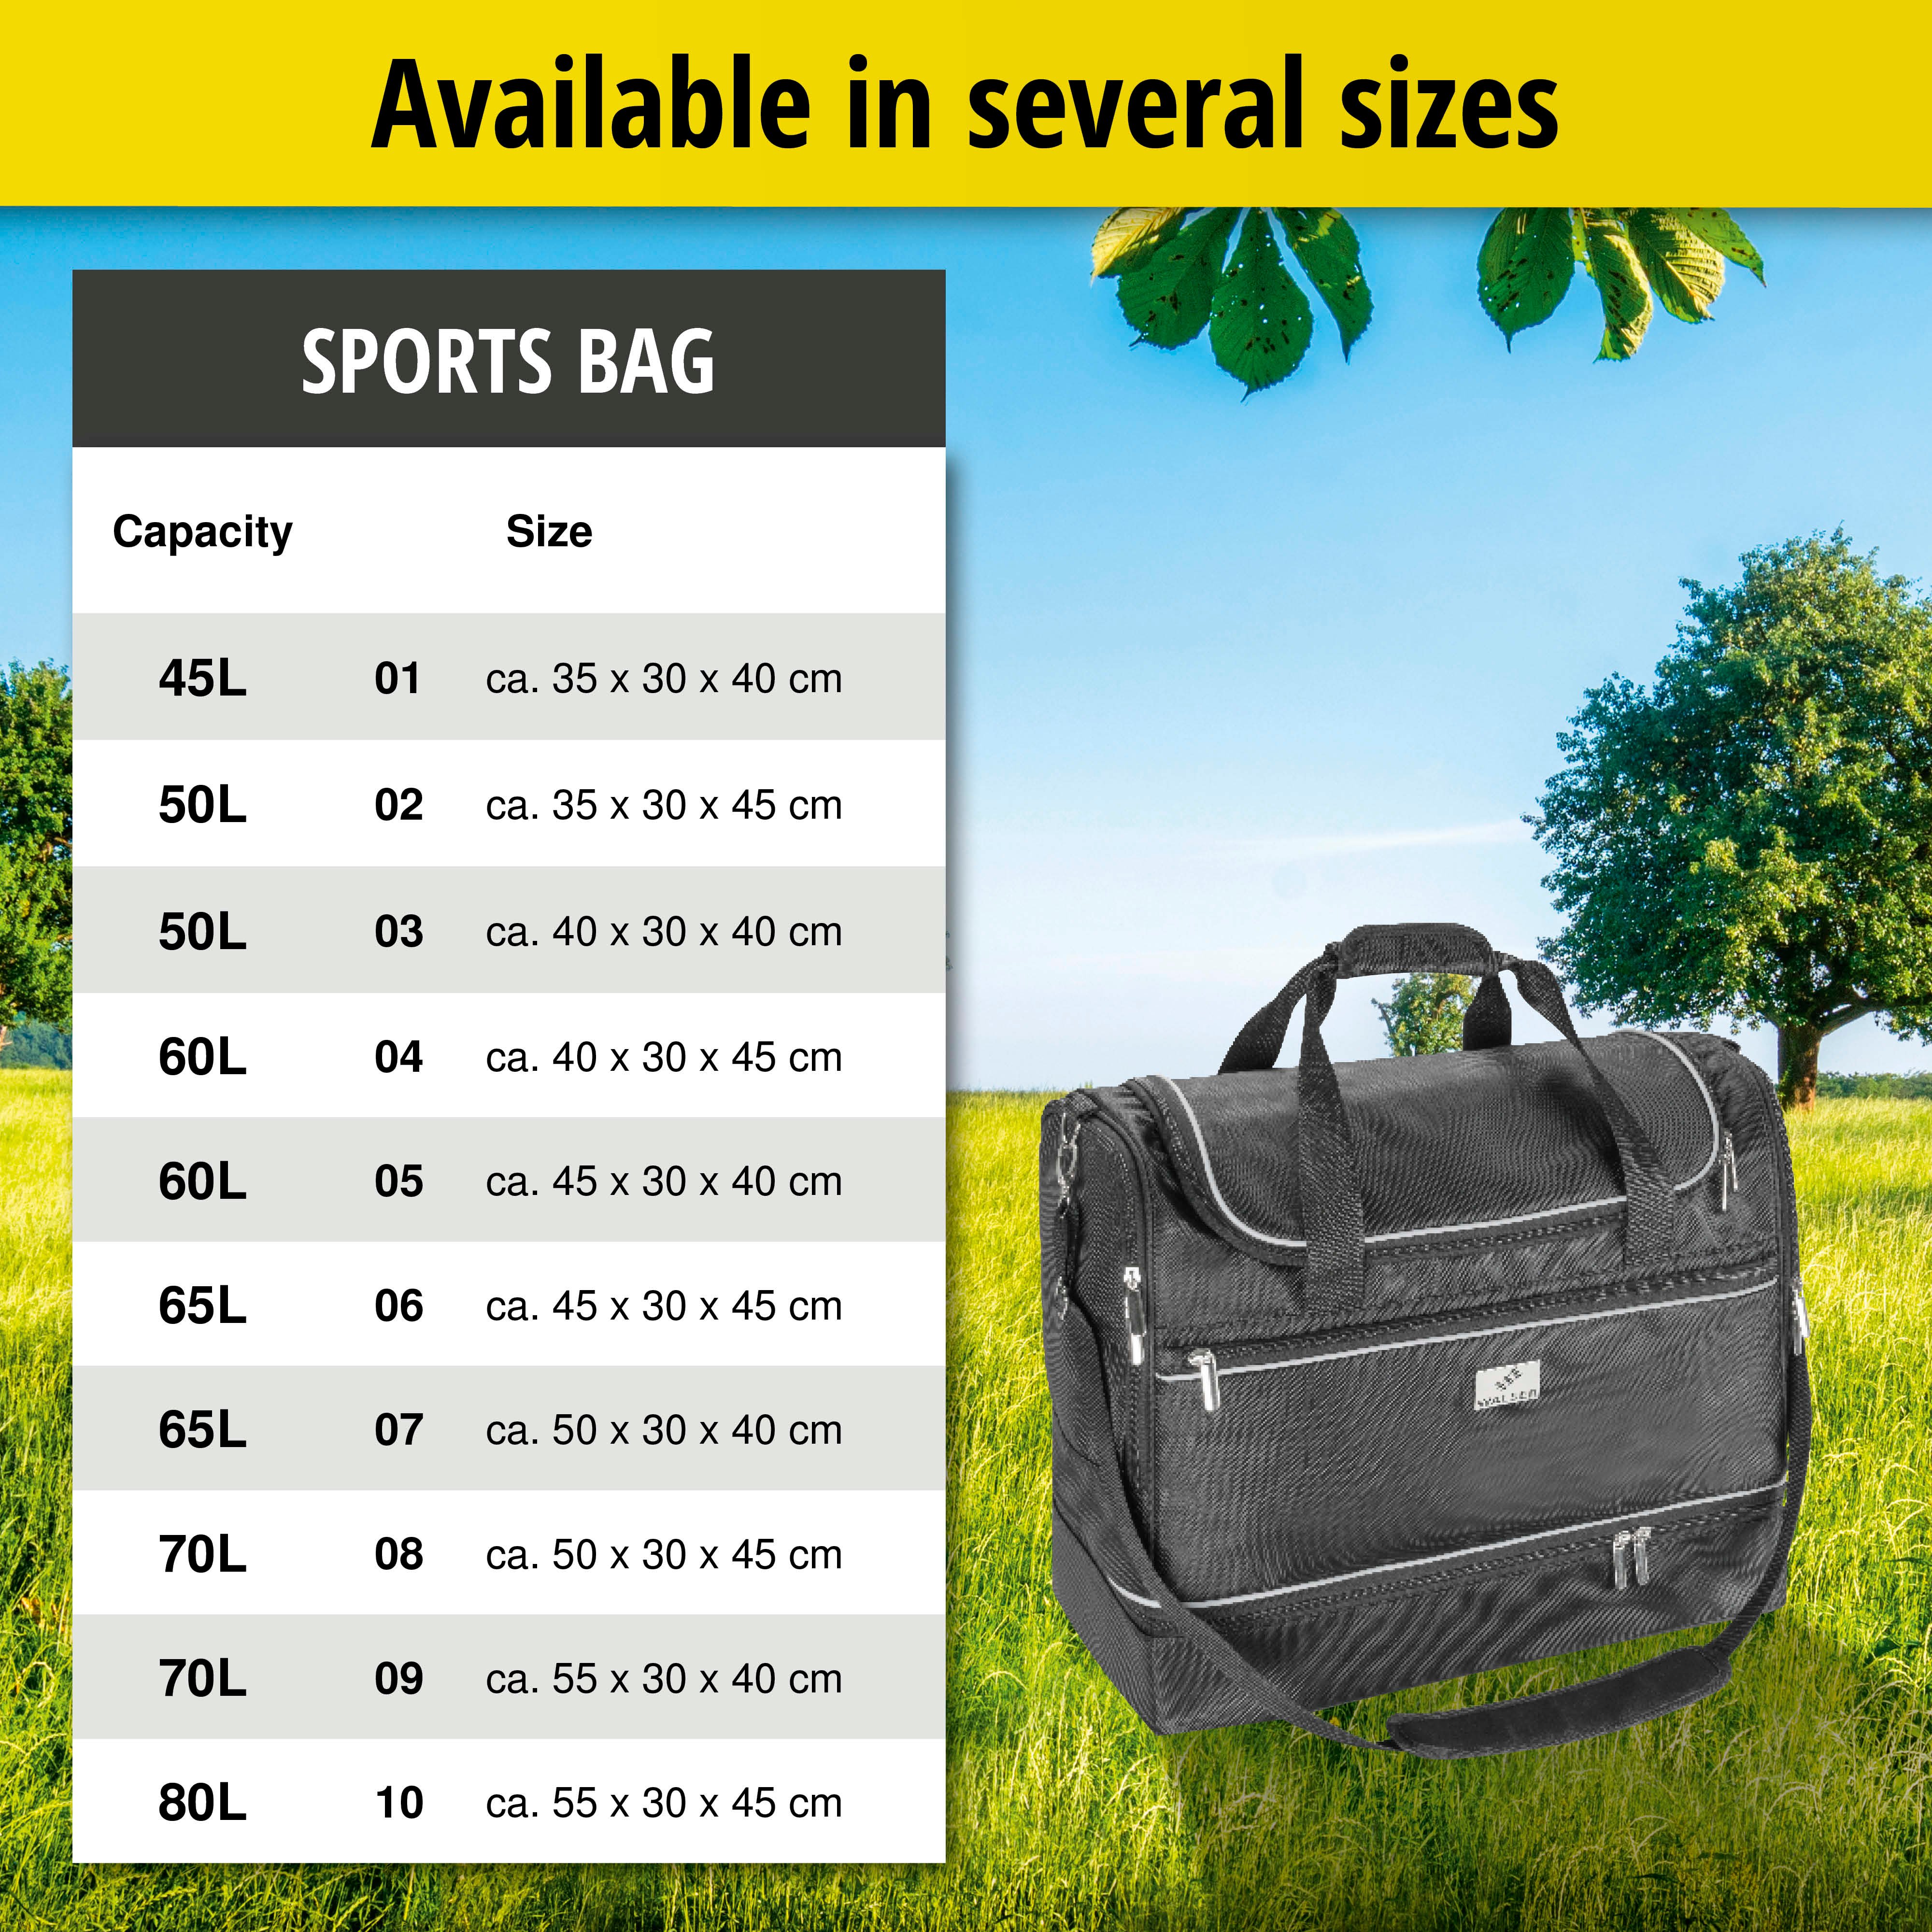 Carbags sports bag 70L - 50x30x45cm